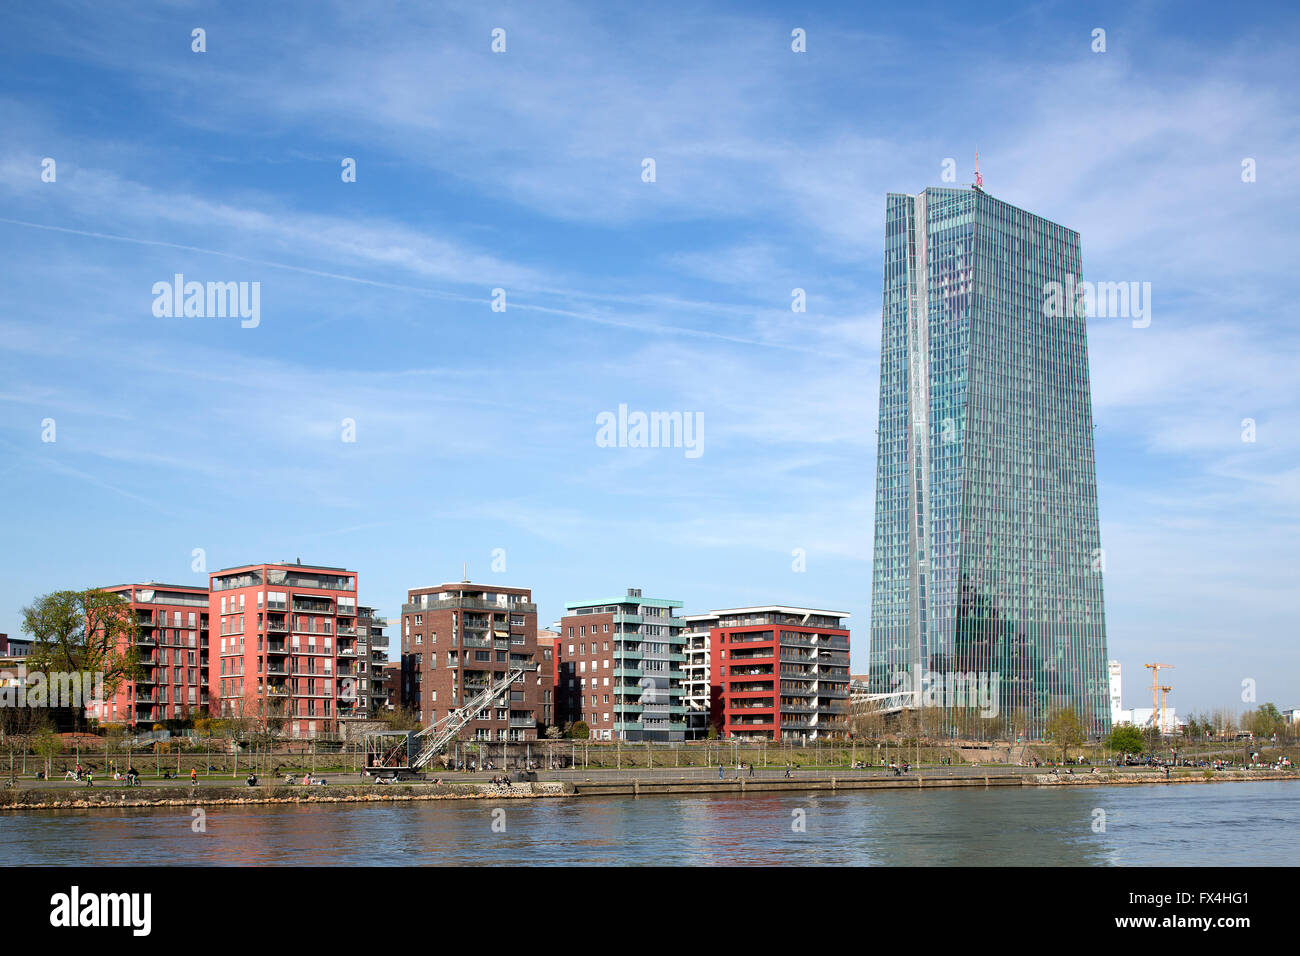 Banca centrale europea, architetto Coop Himmelblau, Francoforte Hesse, Germania Foto Stock